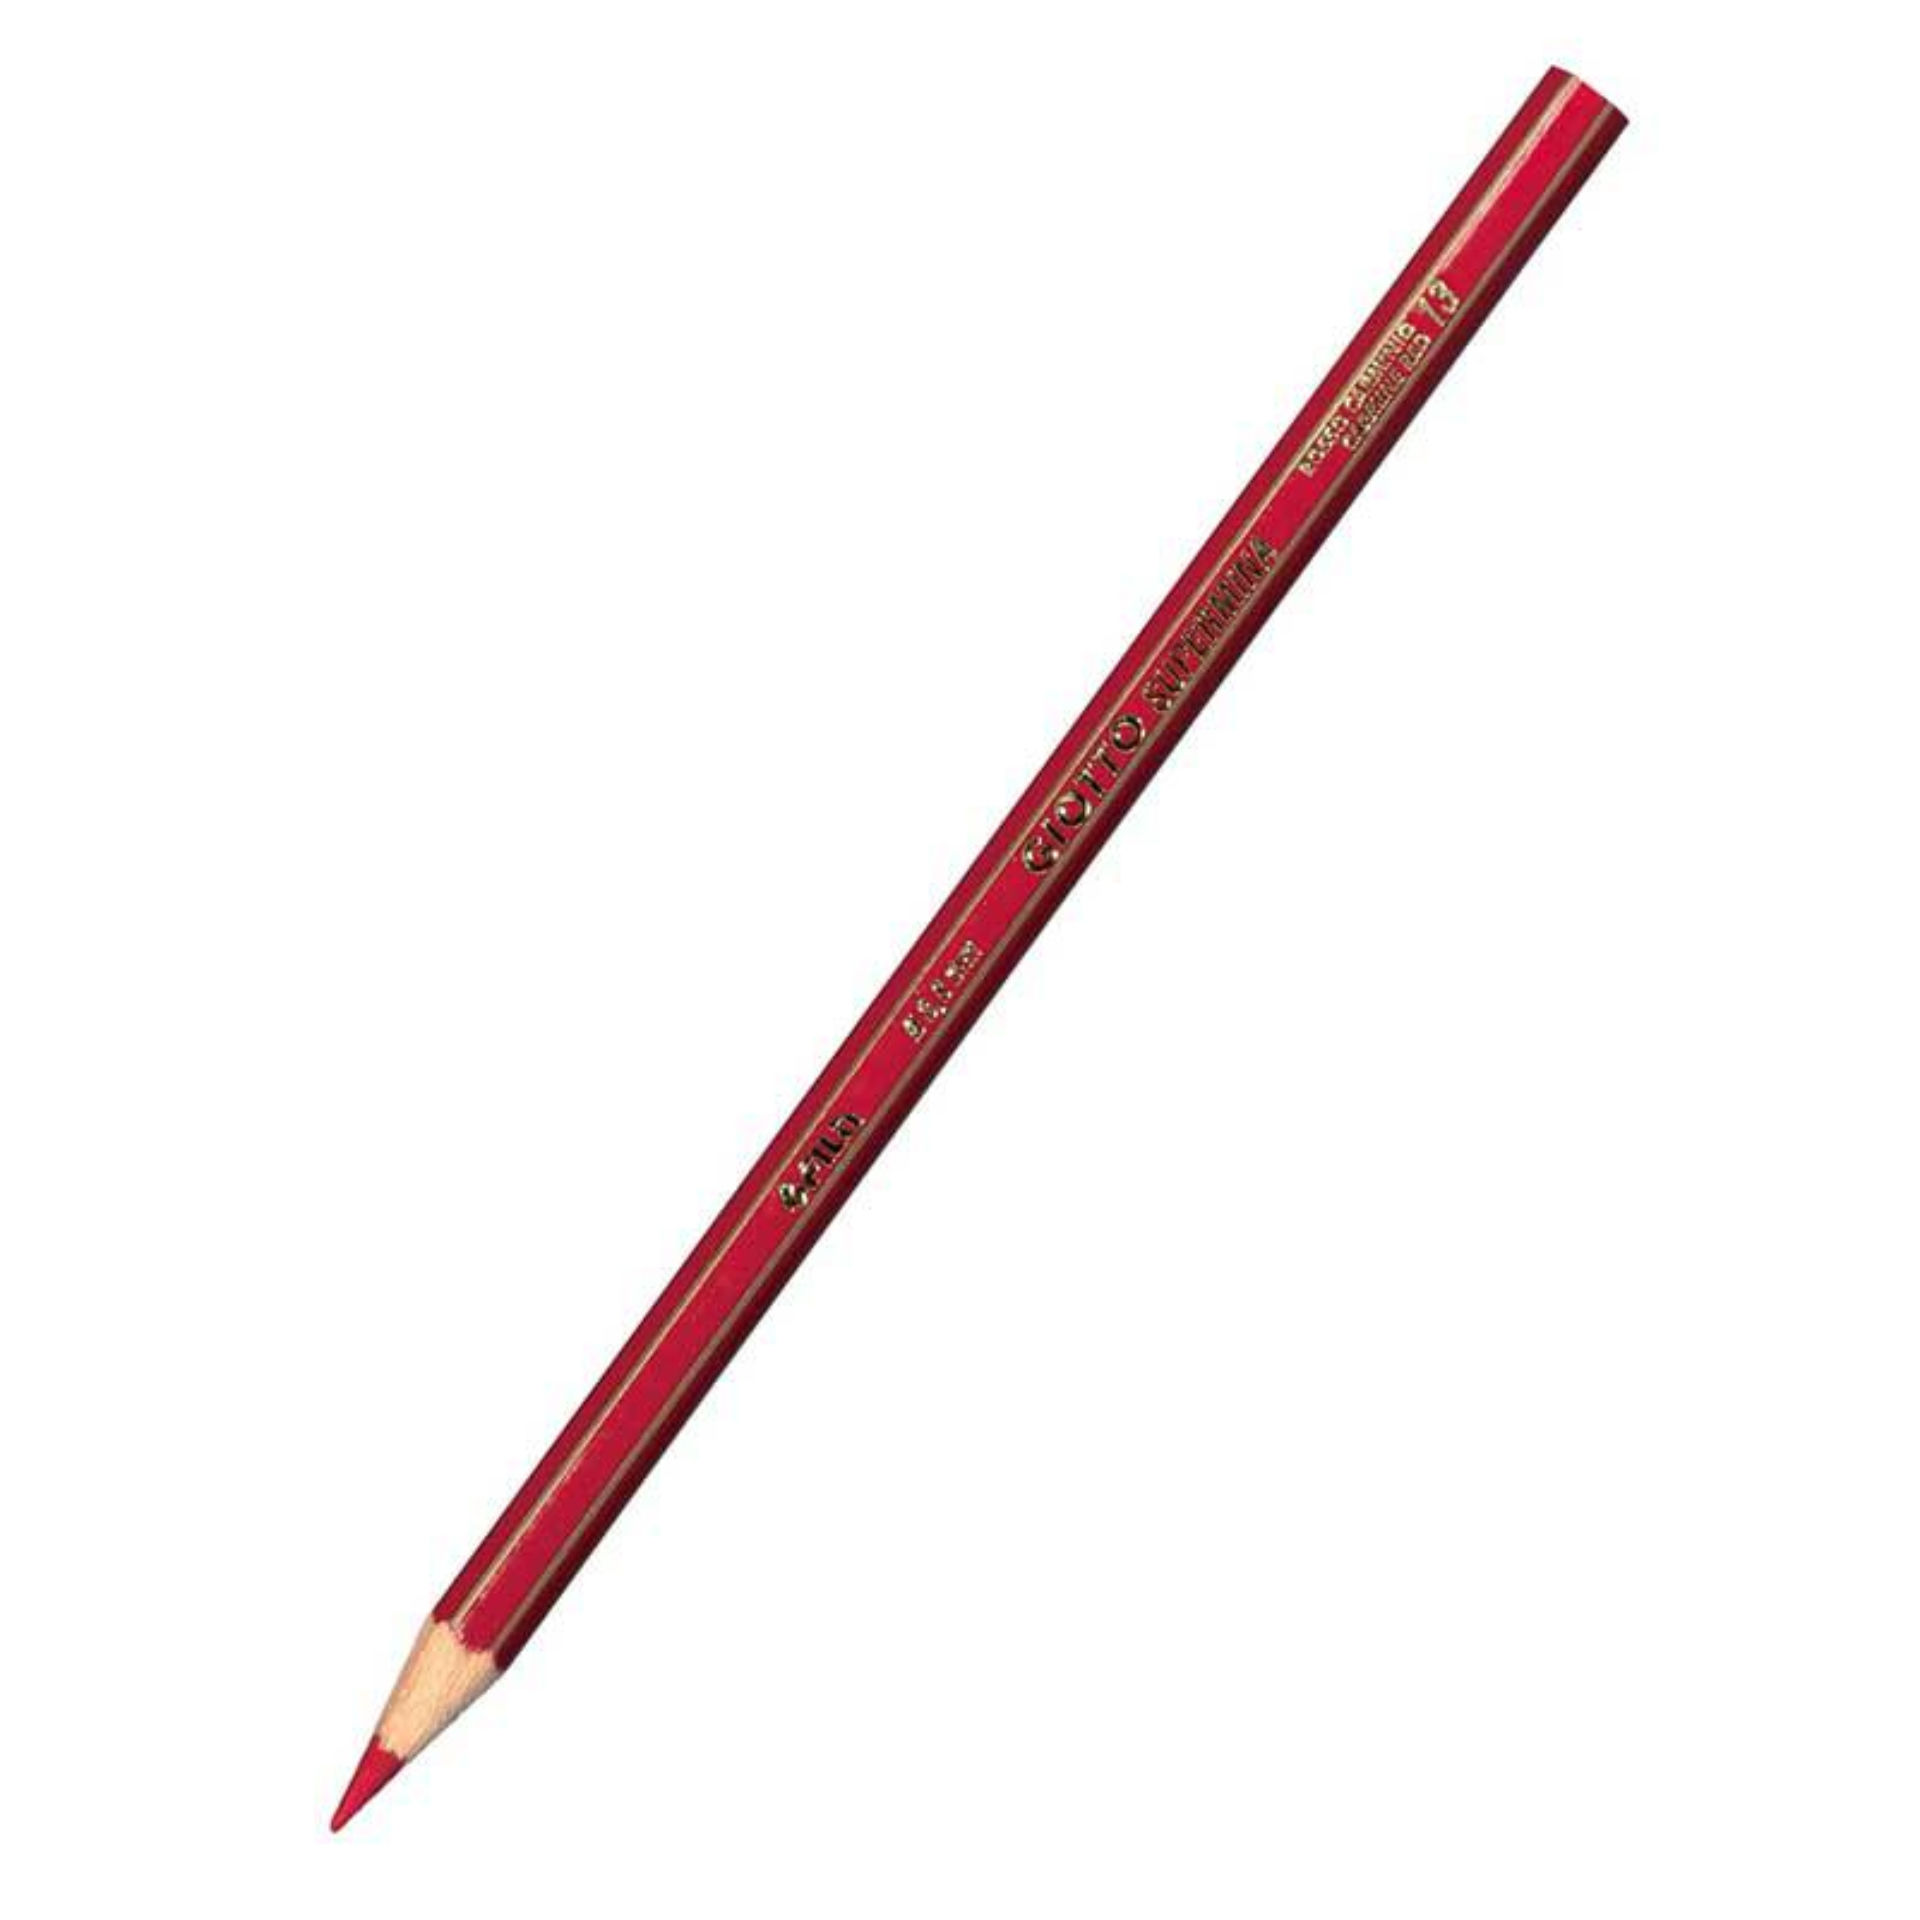 https://www.hualimarket.it/pub/media/catalog/product/cache/ac6b908a8d2904c4cf71502f25c95f64/8/0-201567-43516/giotto-matita-pastello-supermina-rosso-carminio.jpg